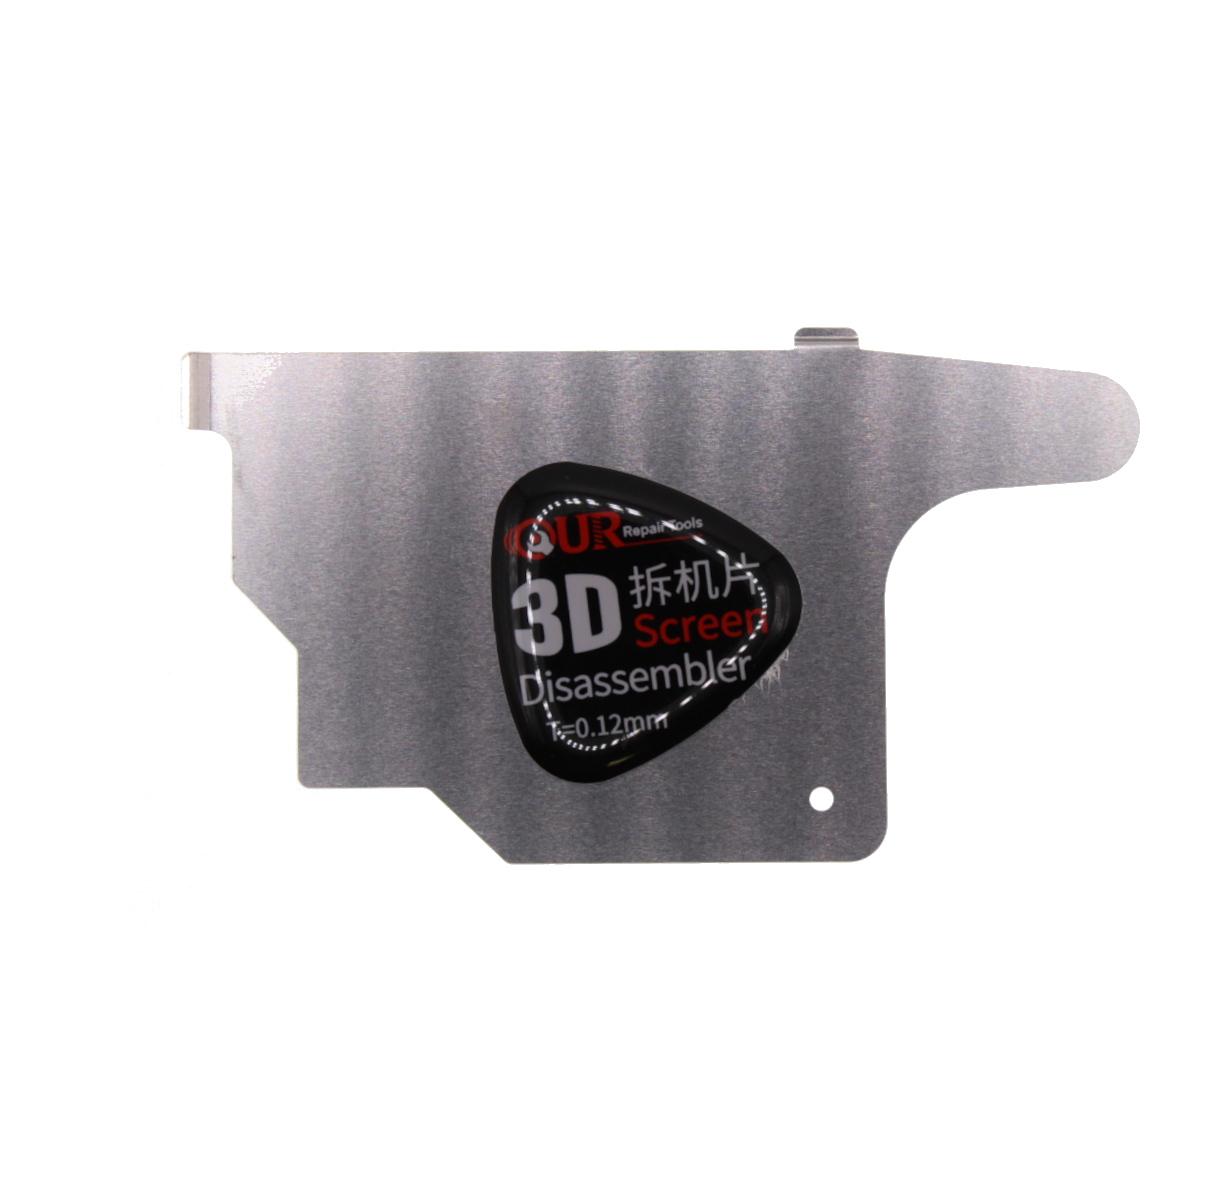 Metal thin LCD opener Musttby 3D Screen Disassembler